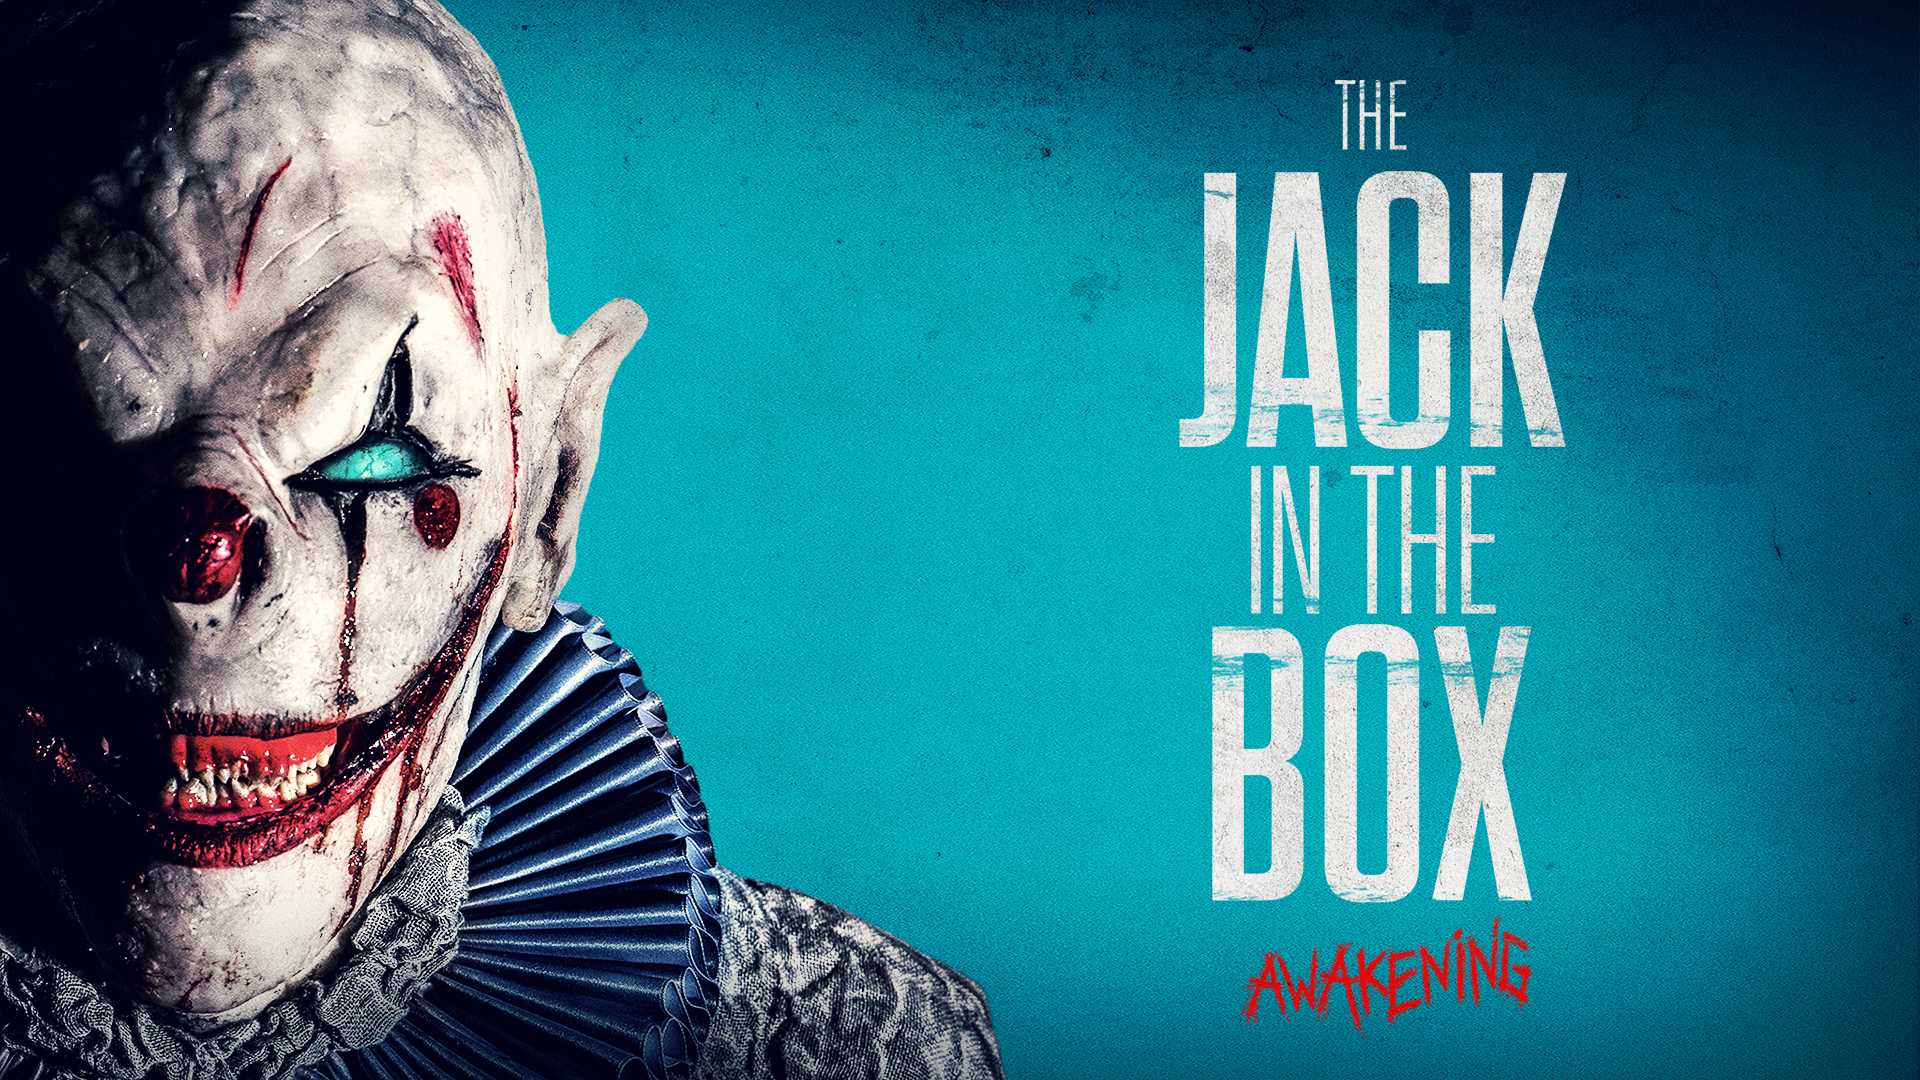 Ma Hề Trong Hộp 2 Thức Tỉnh - The Jack in the Box: Awakening